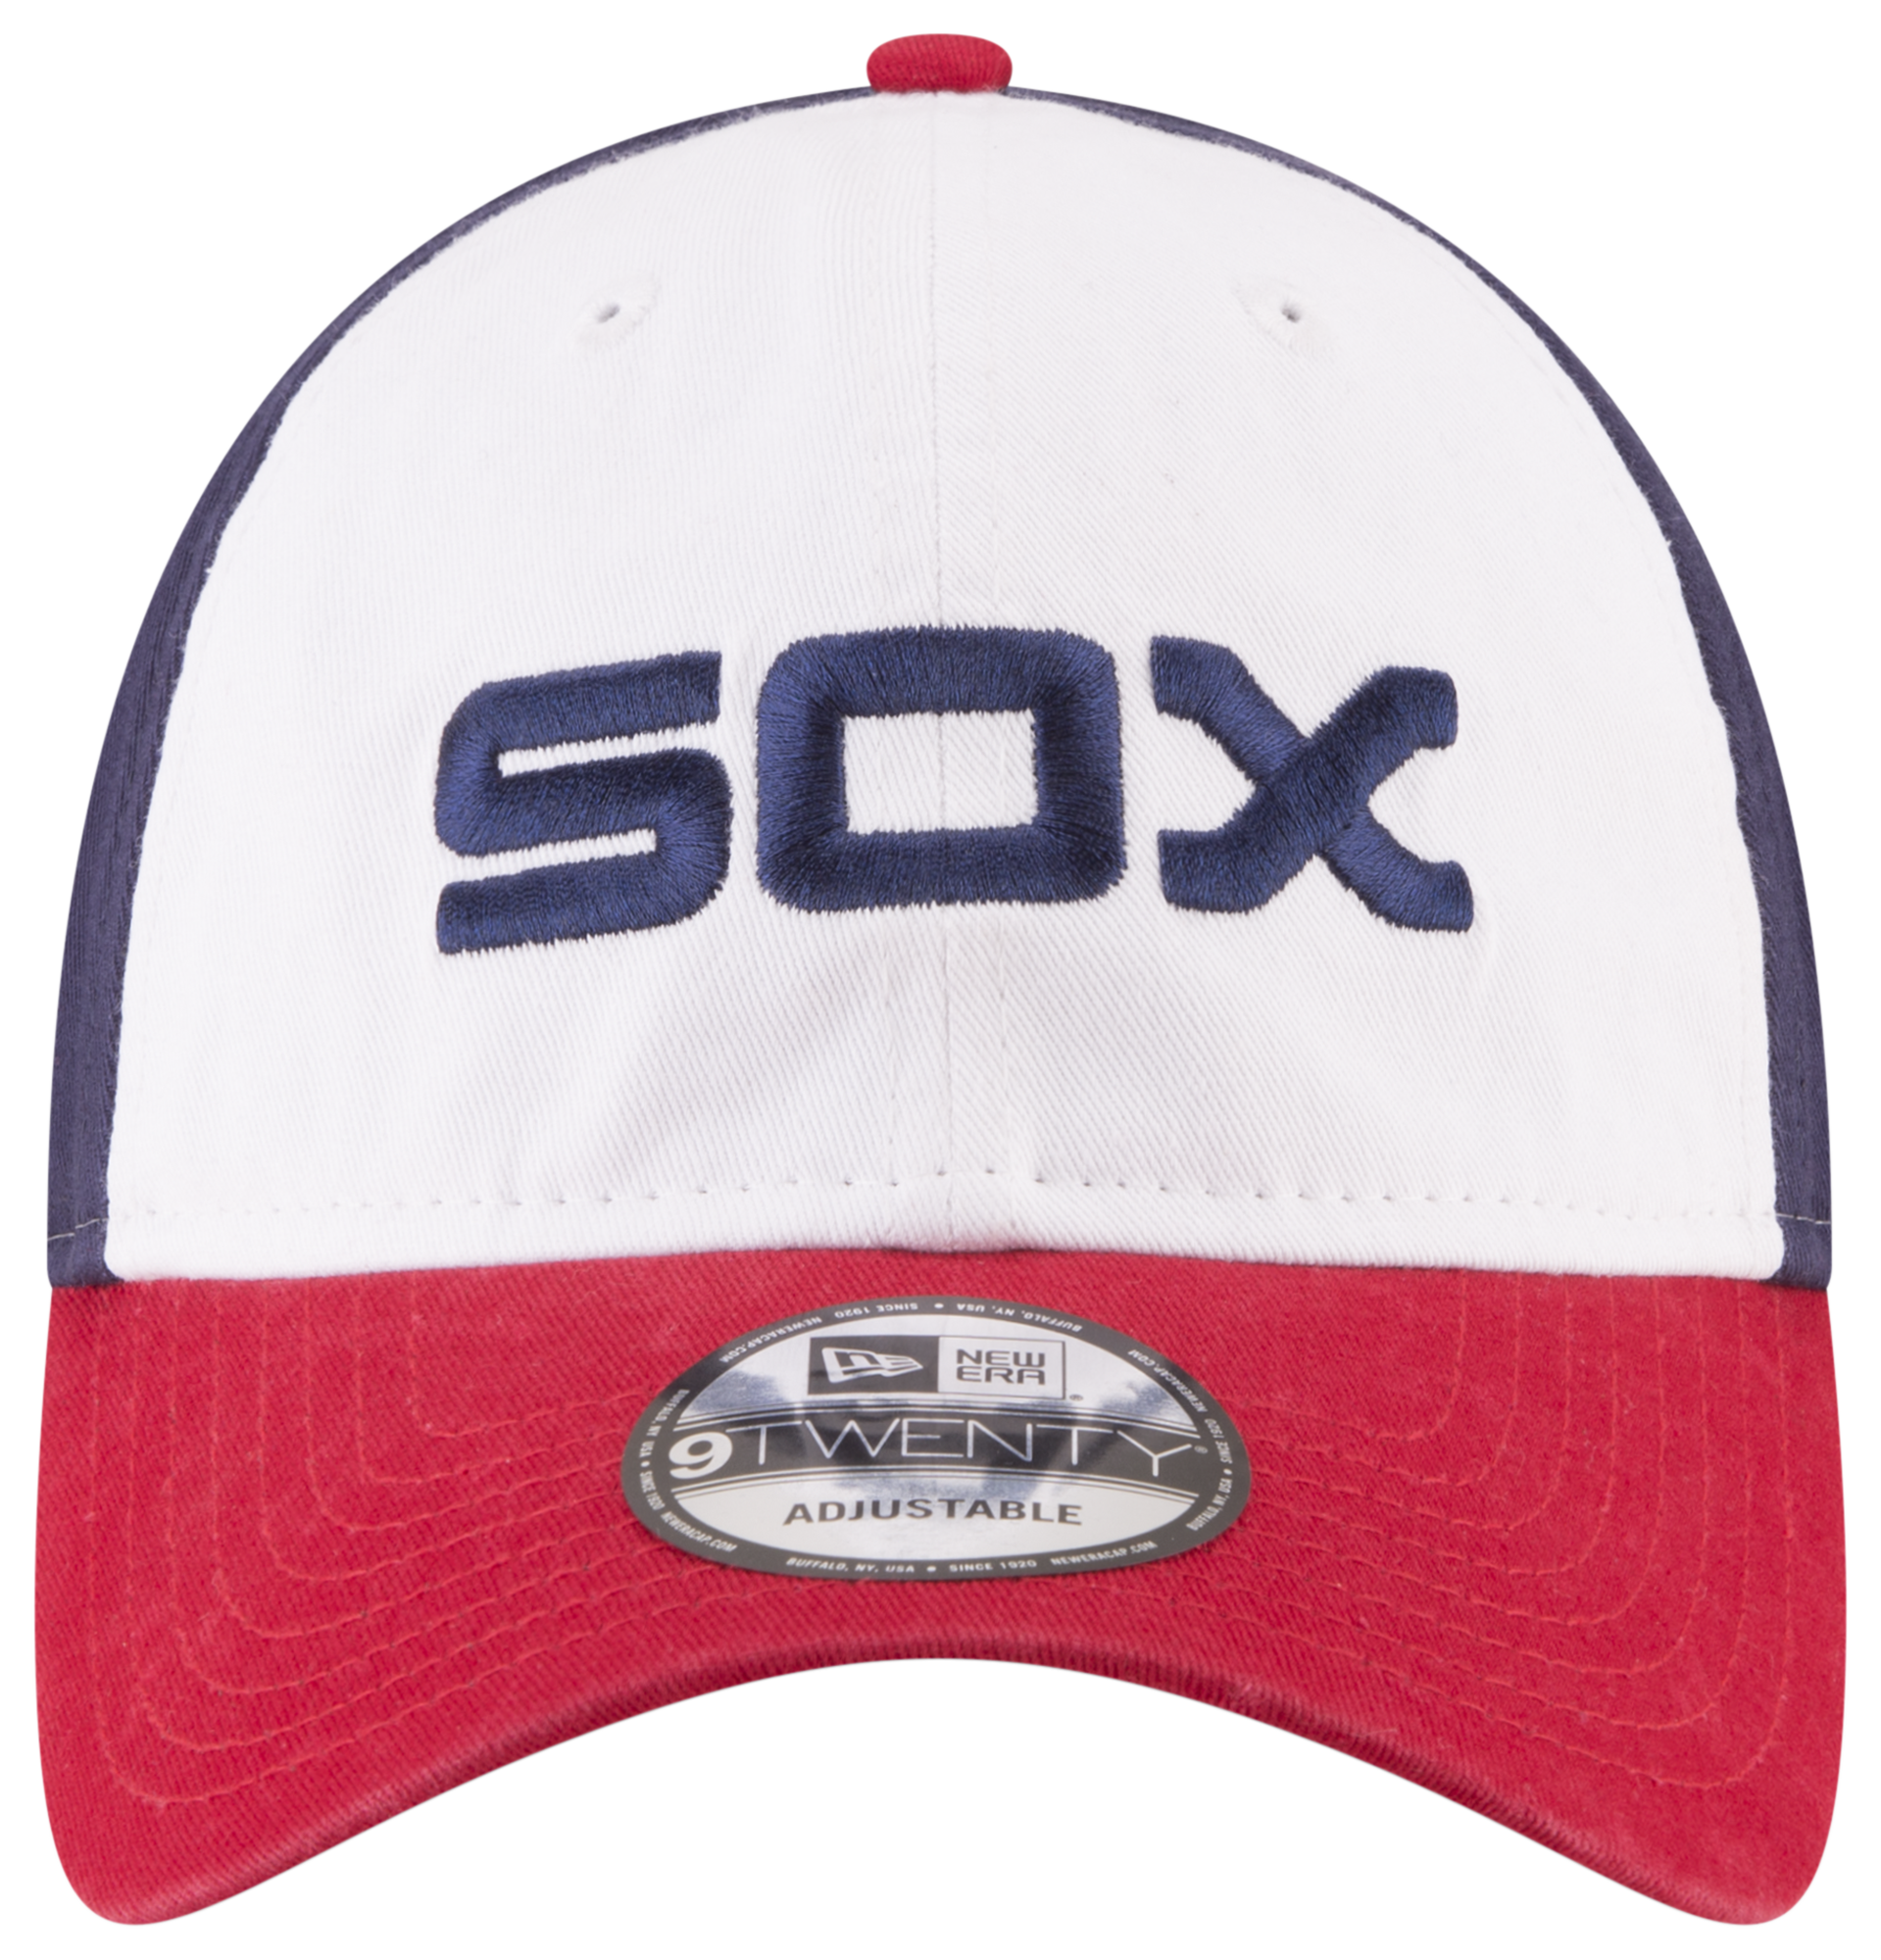 New Era White Sox 2015 Alternate Cap